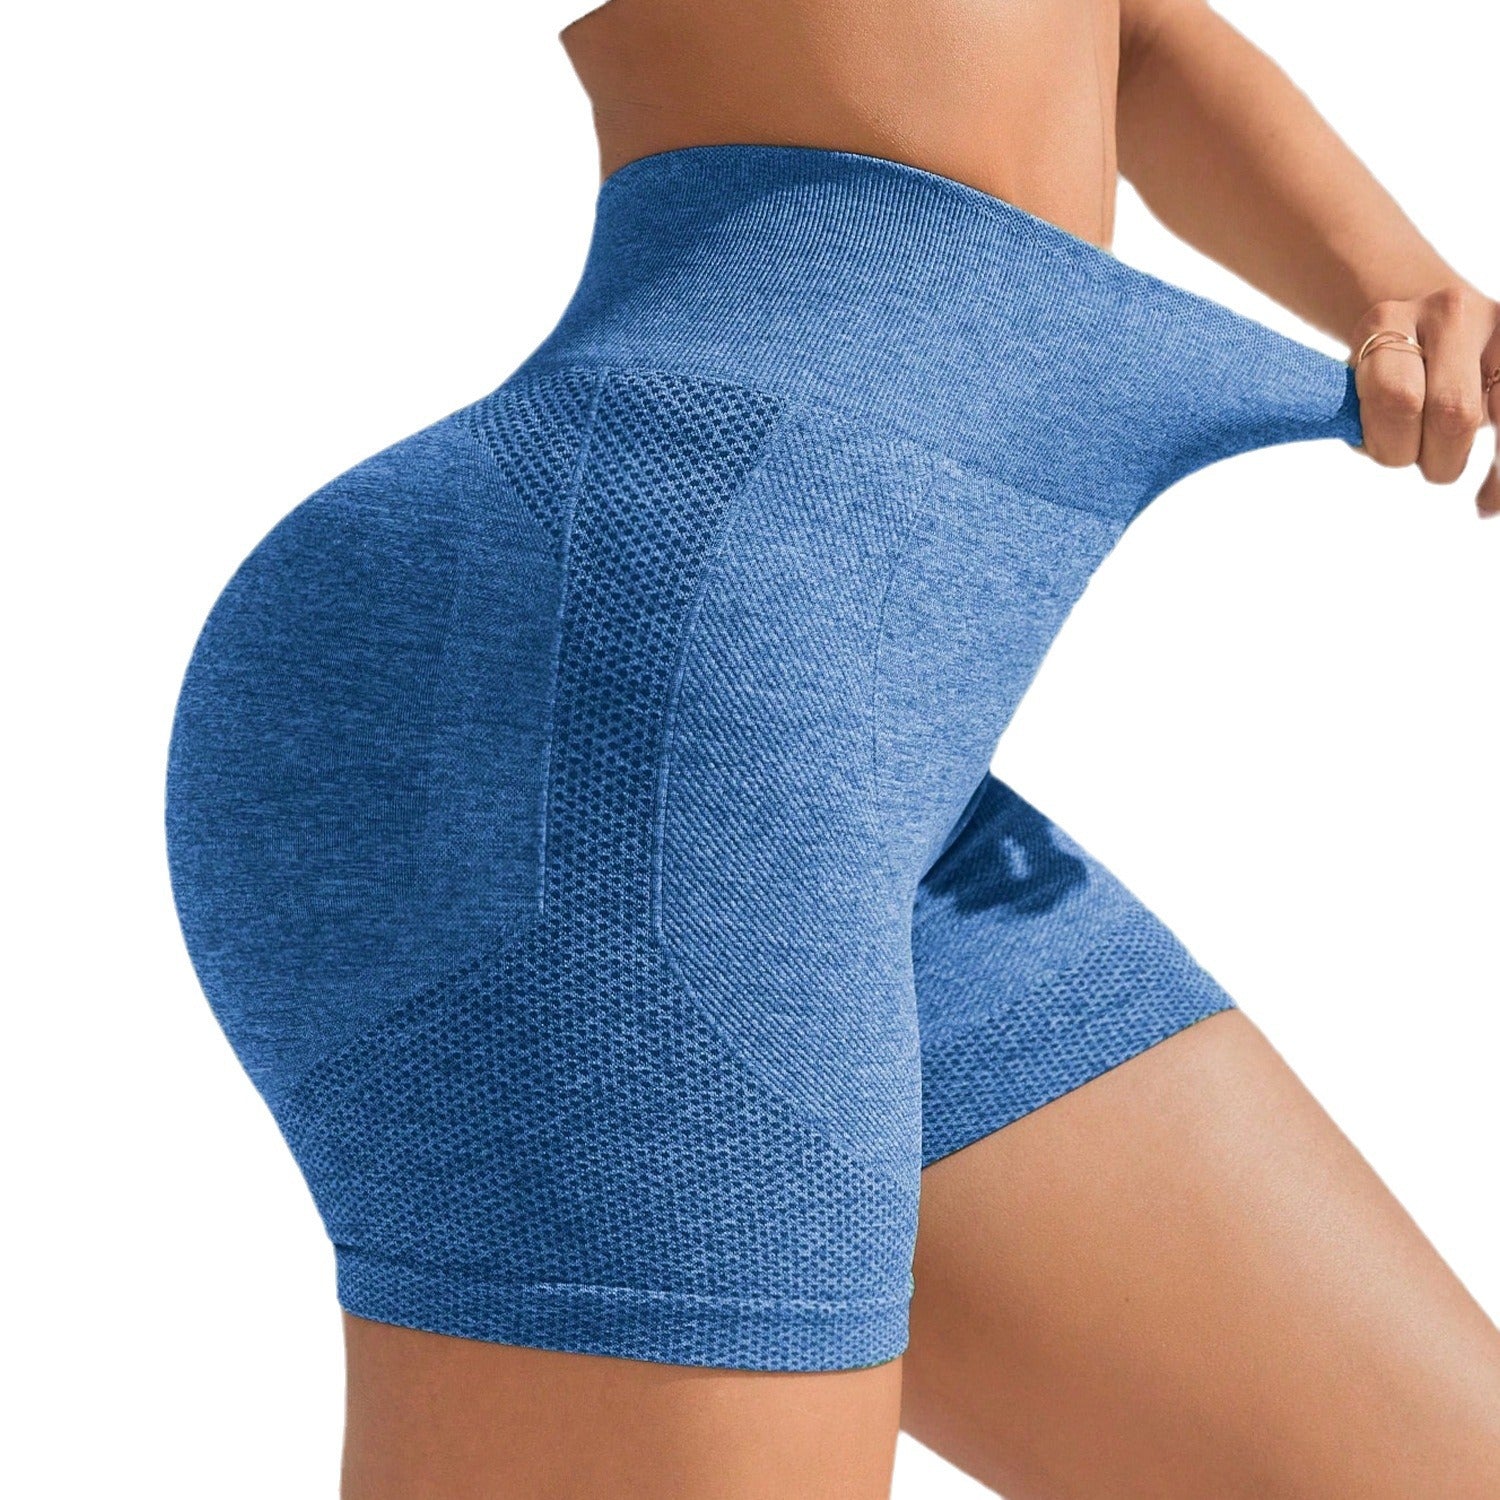 Yoga Pants High Waist Peach Hip Quick-drying Tight Running Fitness Pants Sand Washing Sweatpants